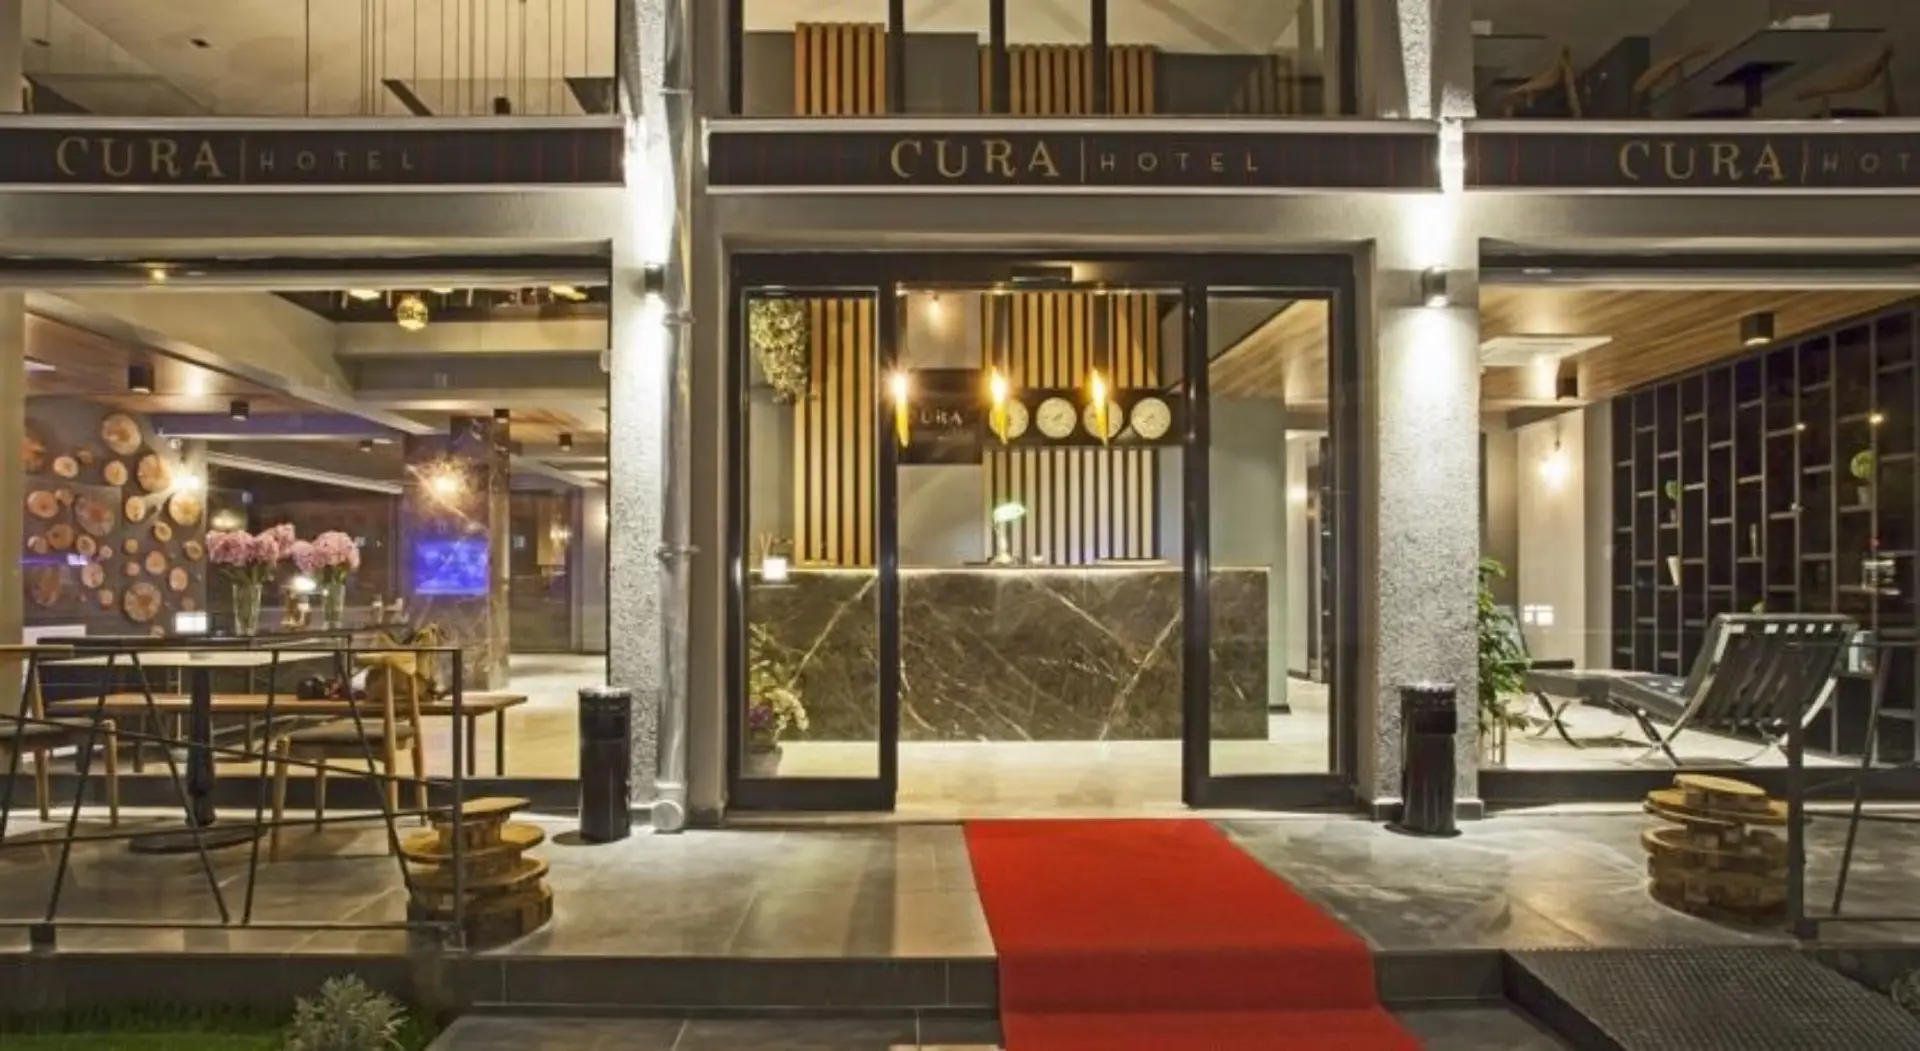 Cura Hotel